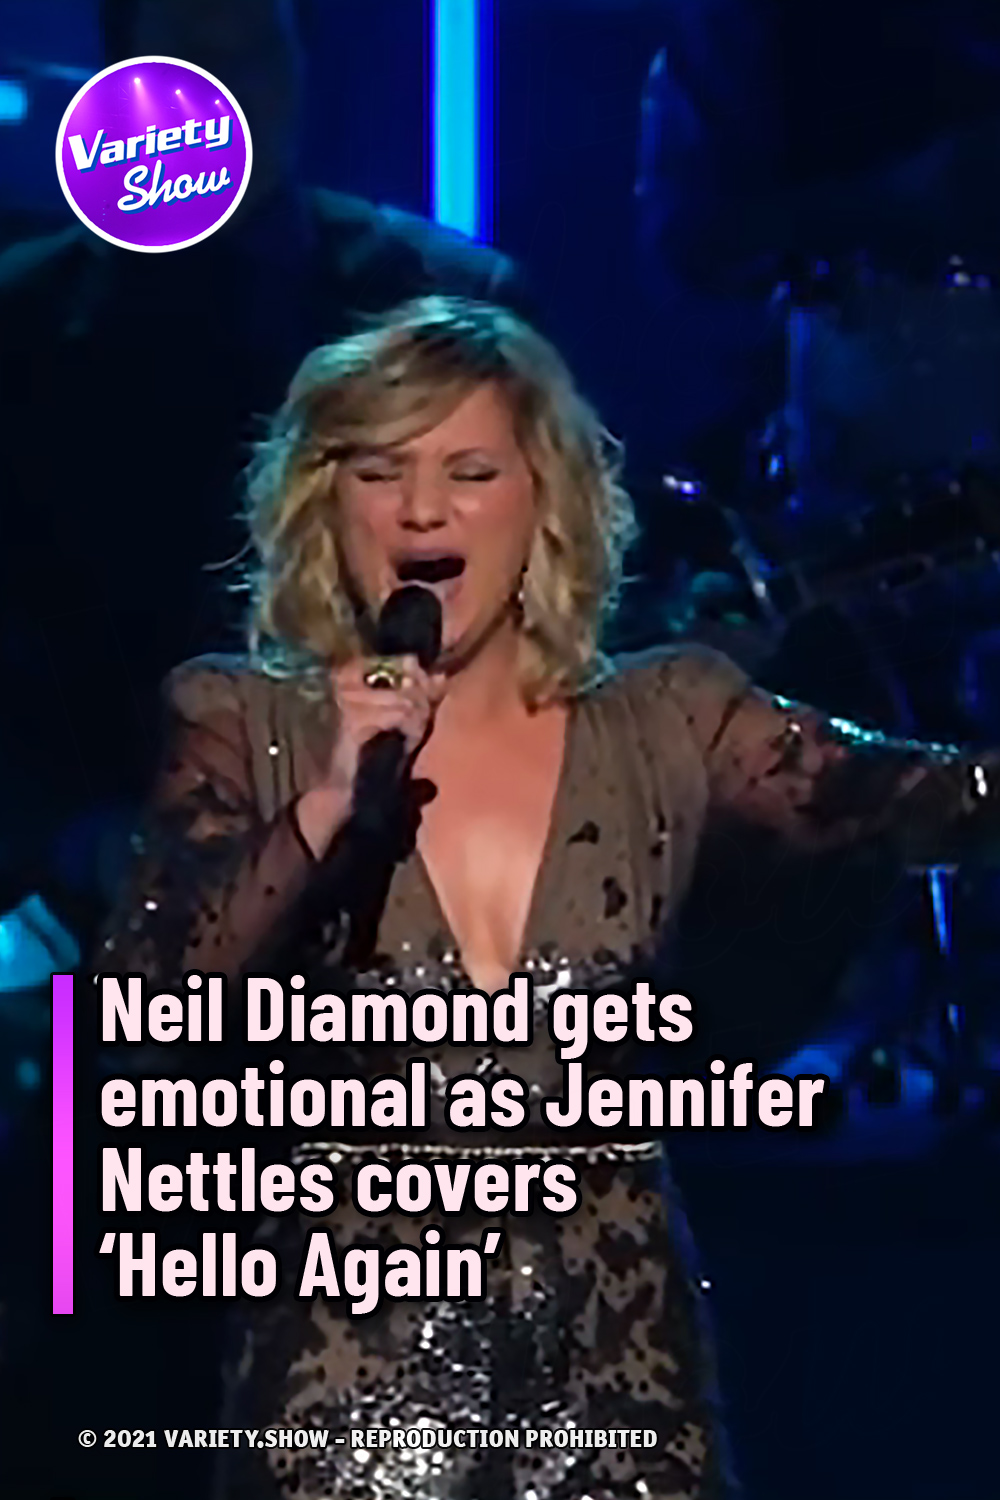 Neil Diamond gets emotional as Jennifer Nettles covers ‘Hello Again’